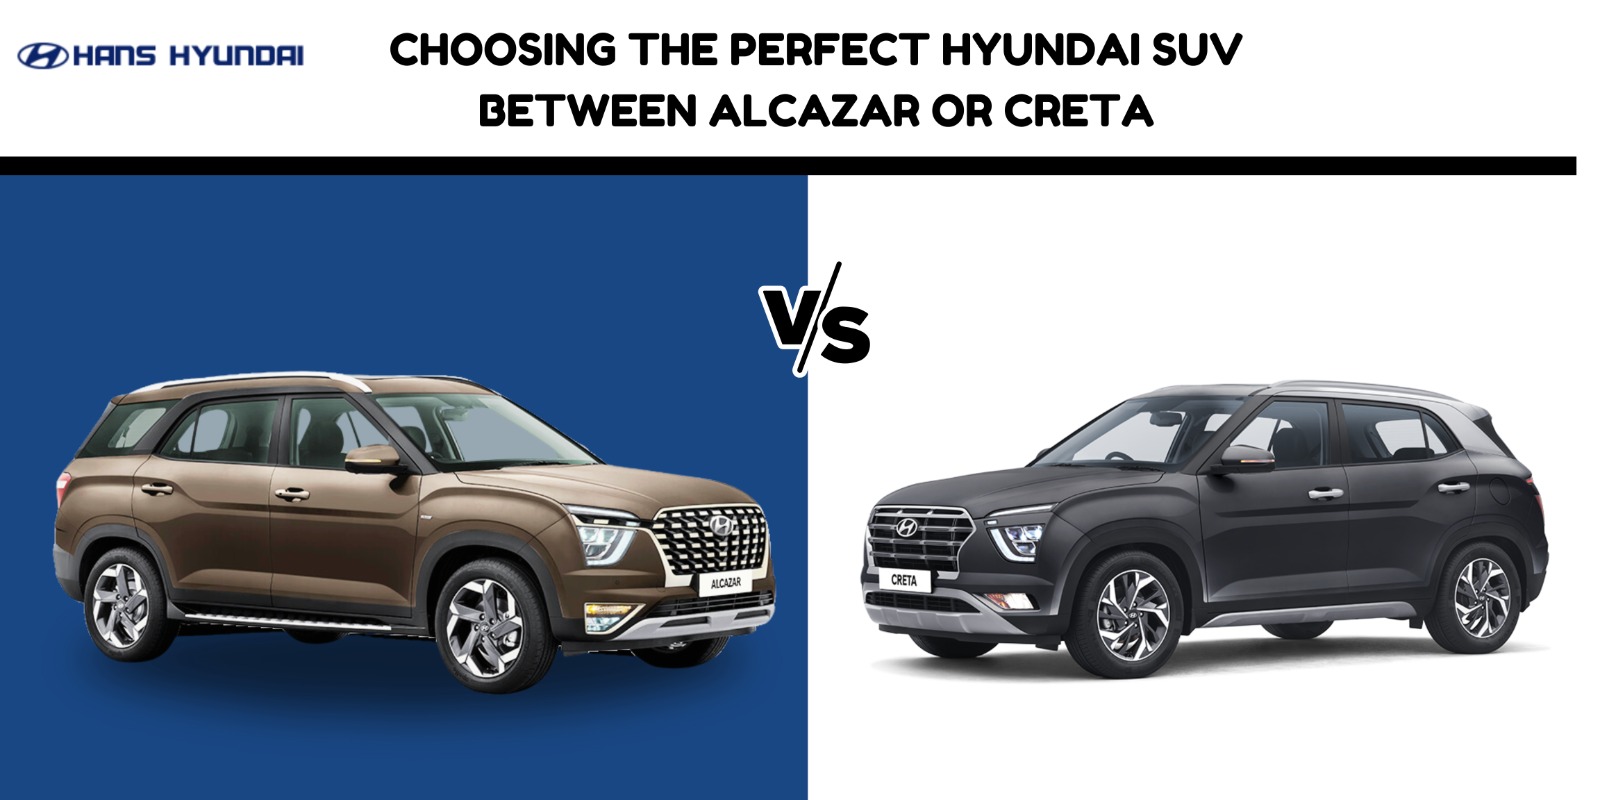 Hyundai Alcazar vs Hyundai Creta